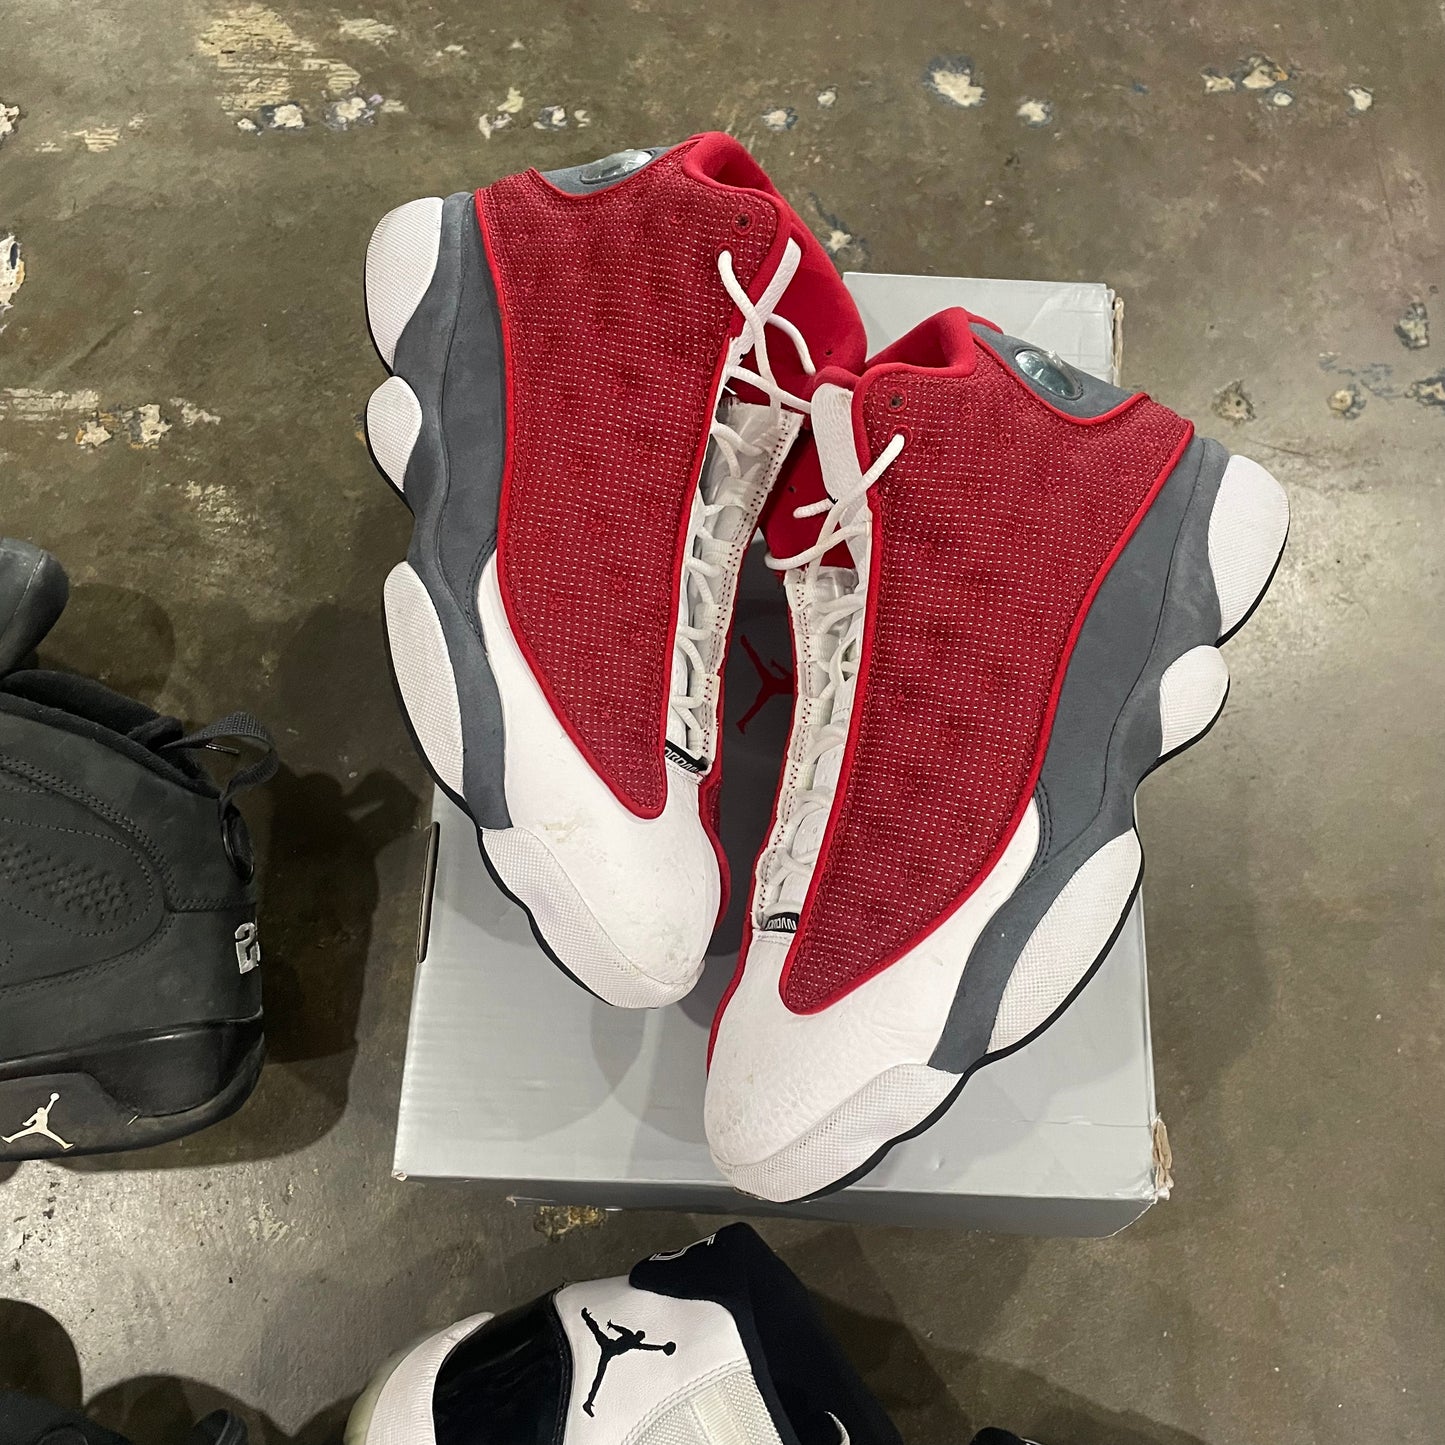 Jordan 13 Red Flint Size 10.5 (HOU) (Trusted Club)